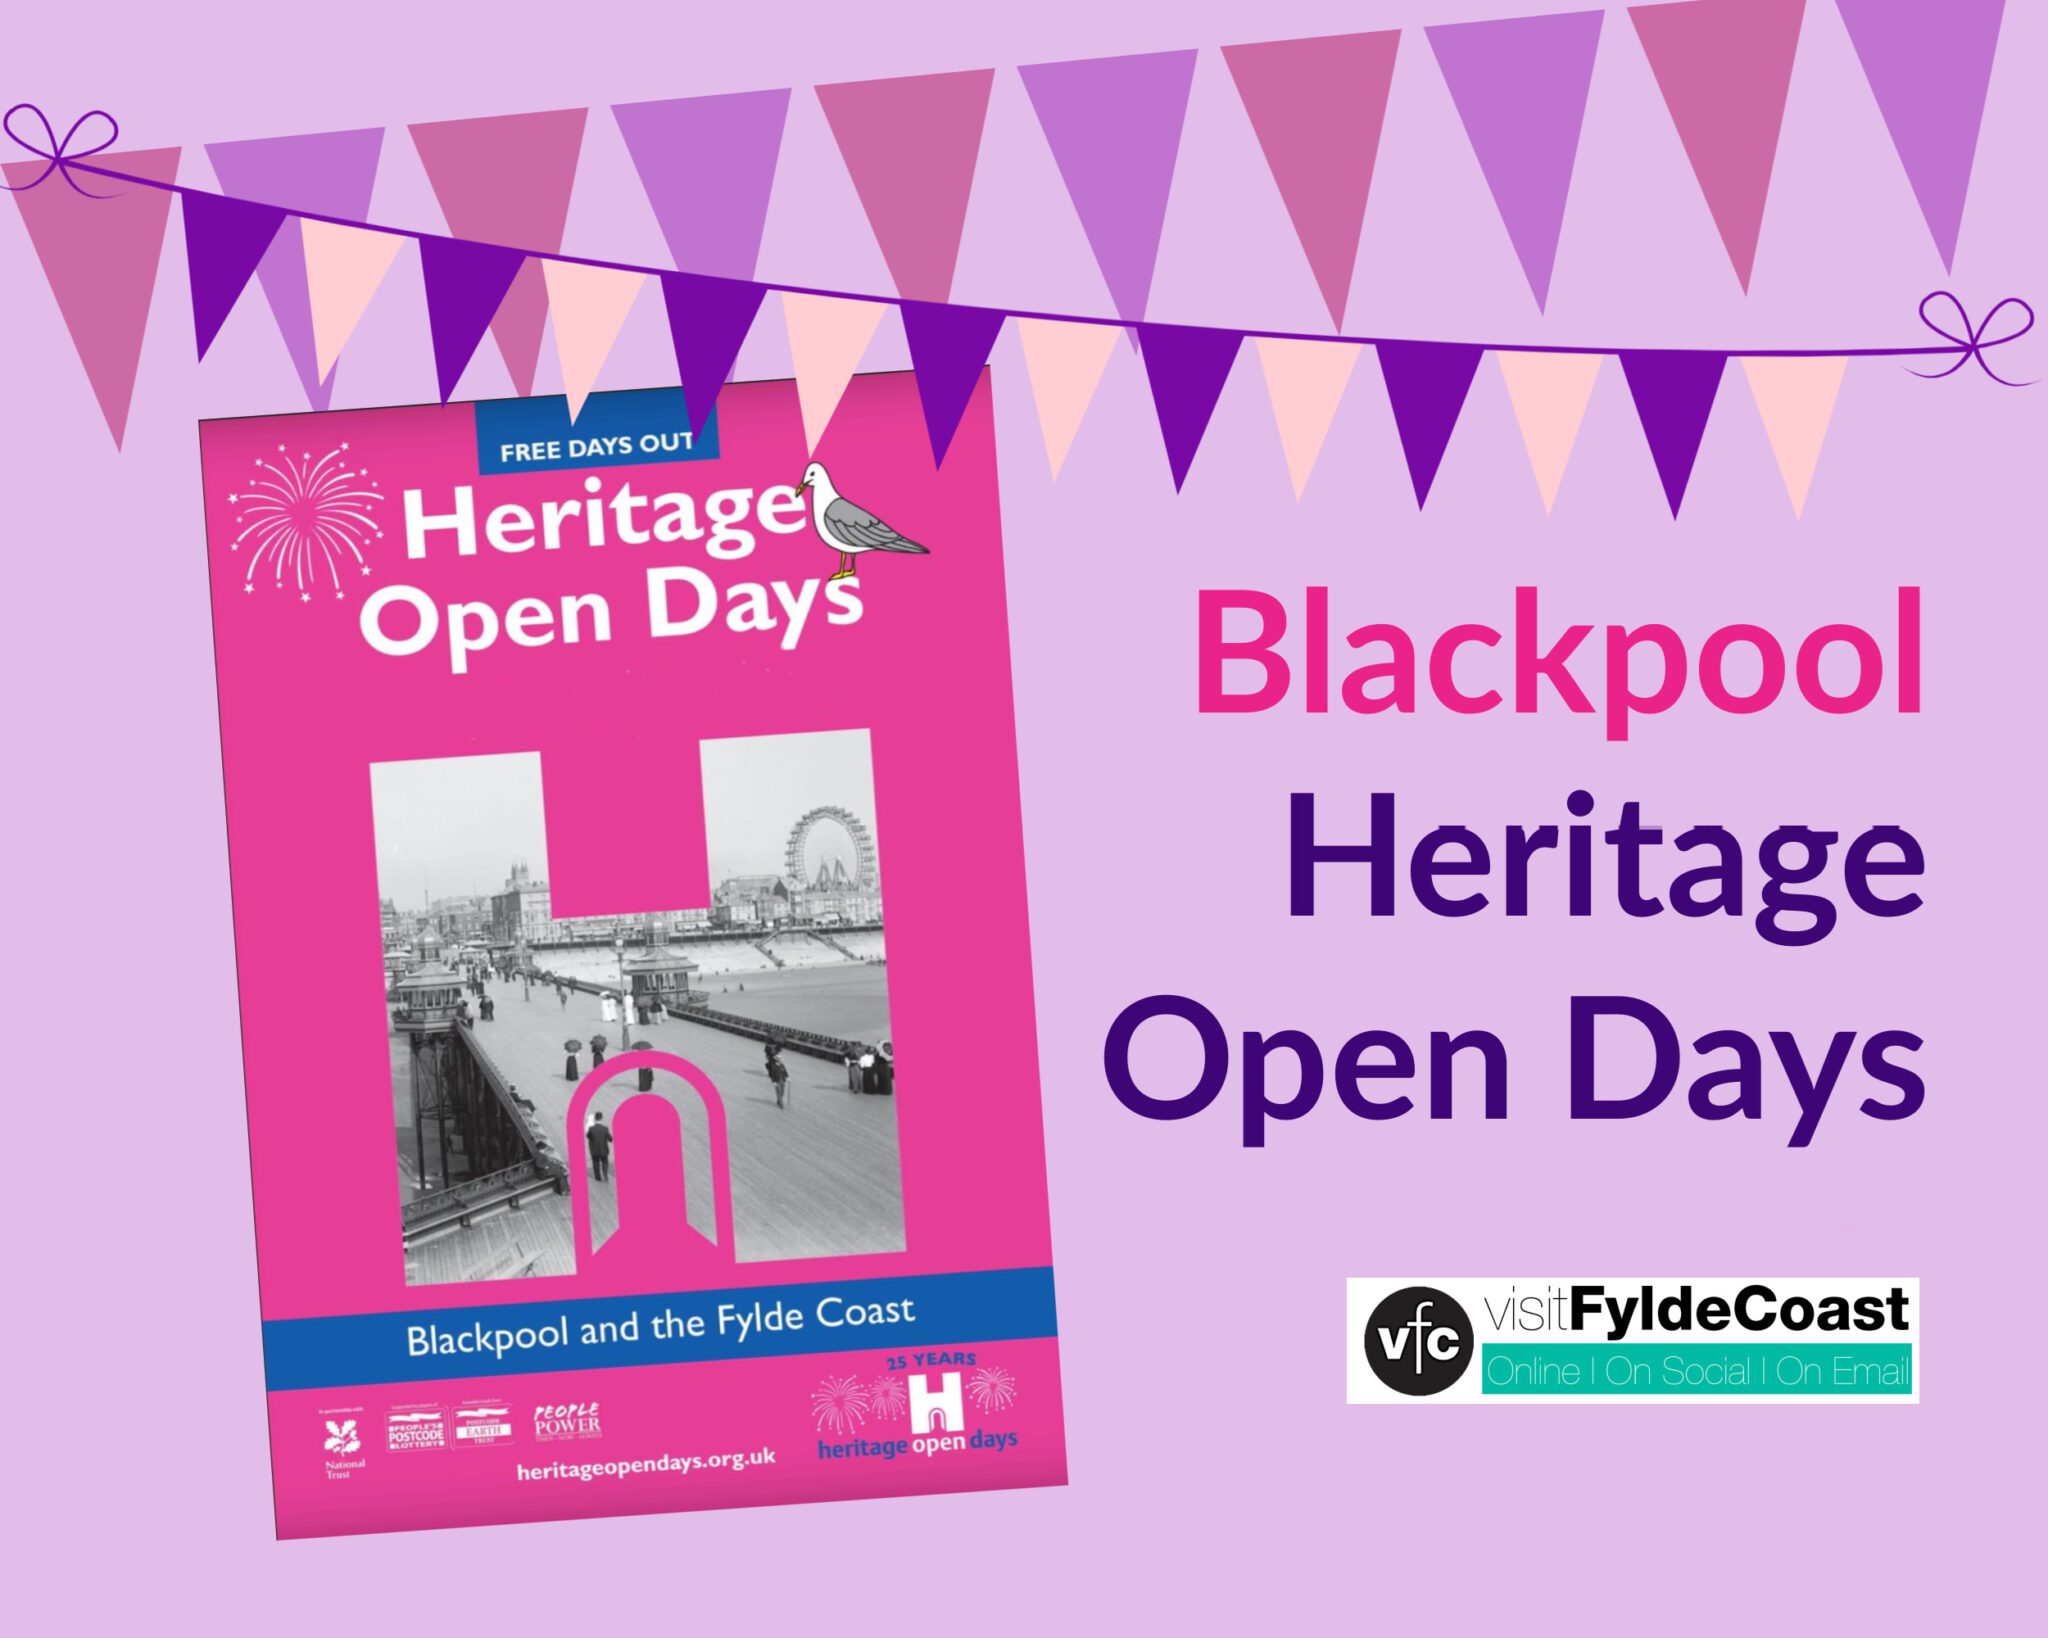 Blackpool Heritage Open Days